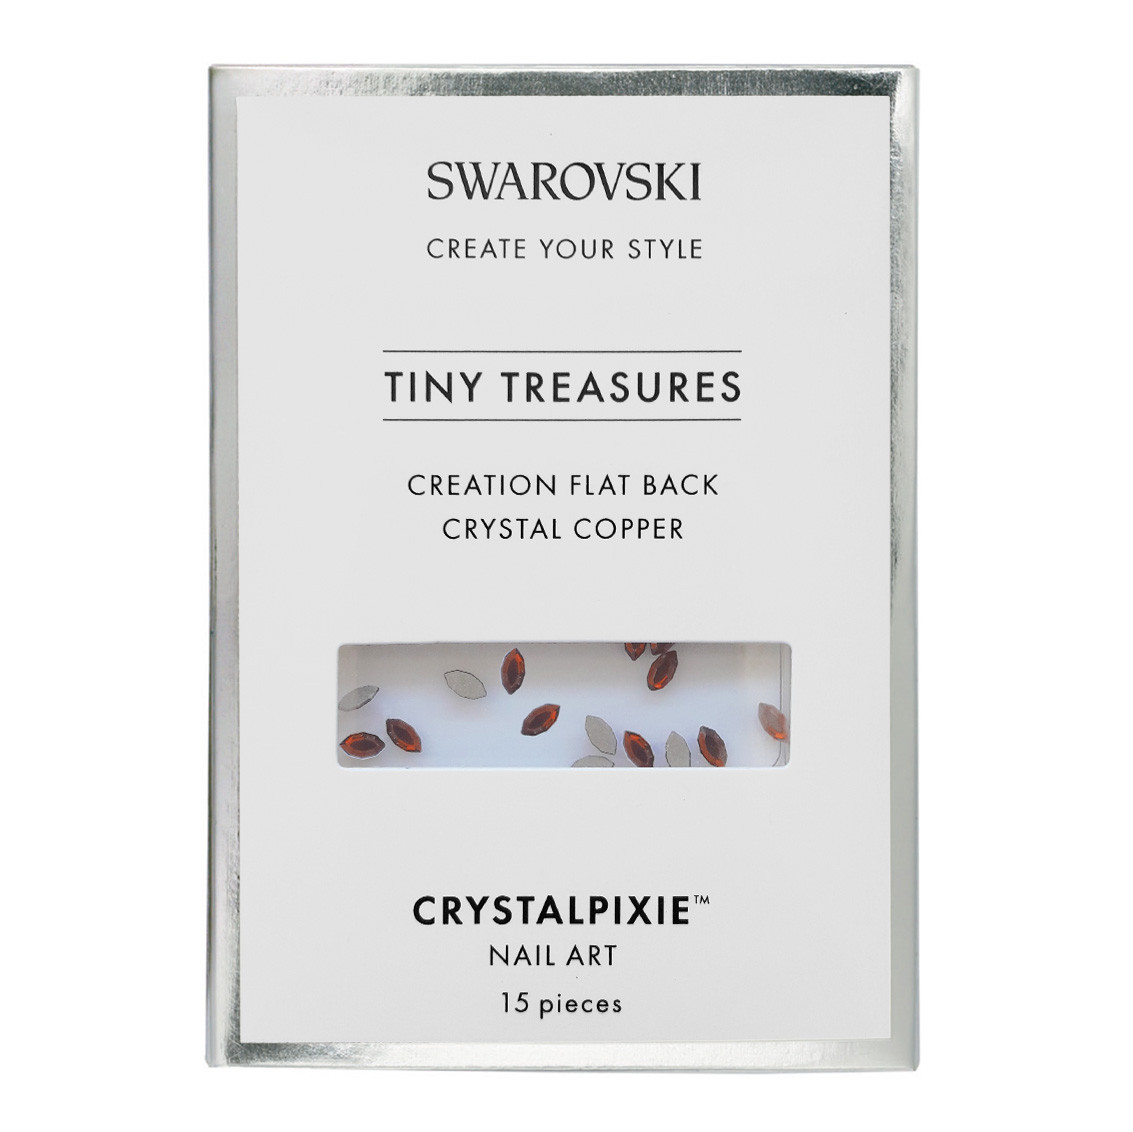 Creation Flat Back - Kristall Copper 20 Stück - Swarovski® Tiny Treasures